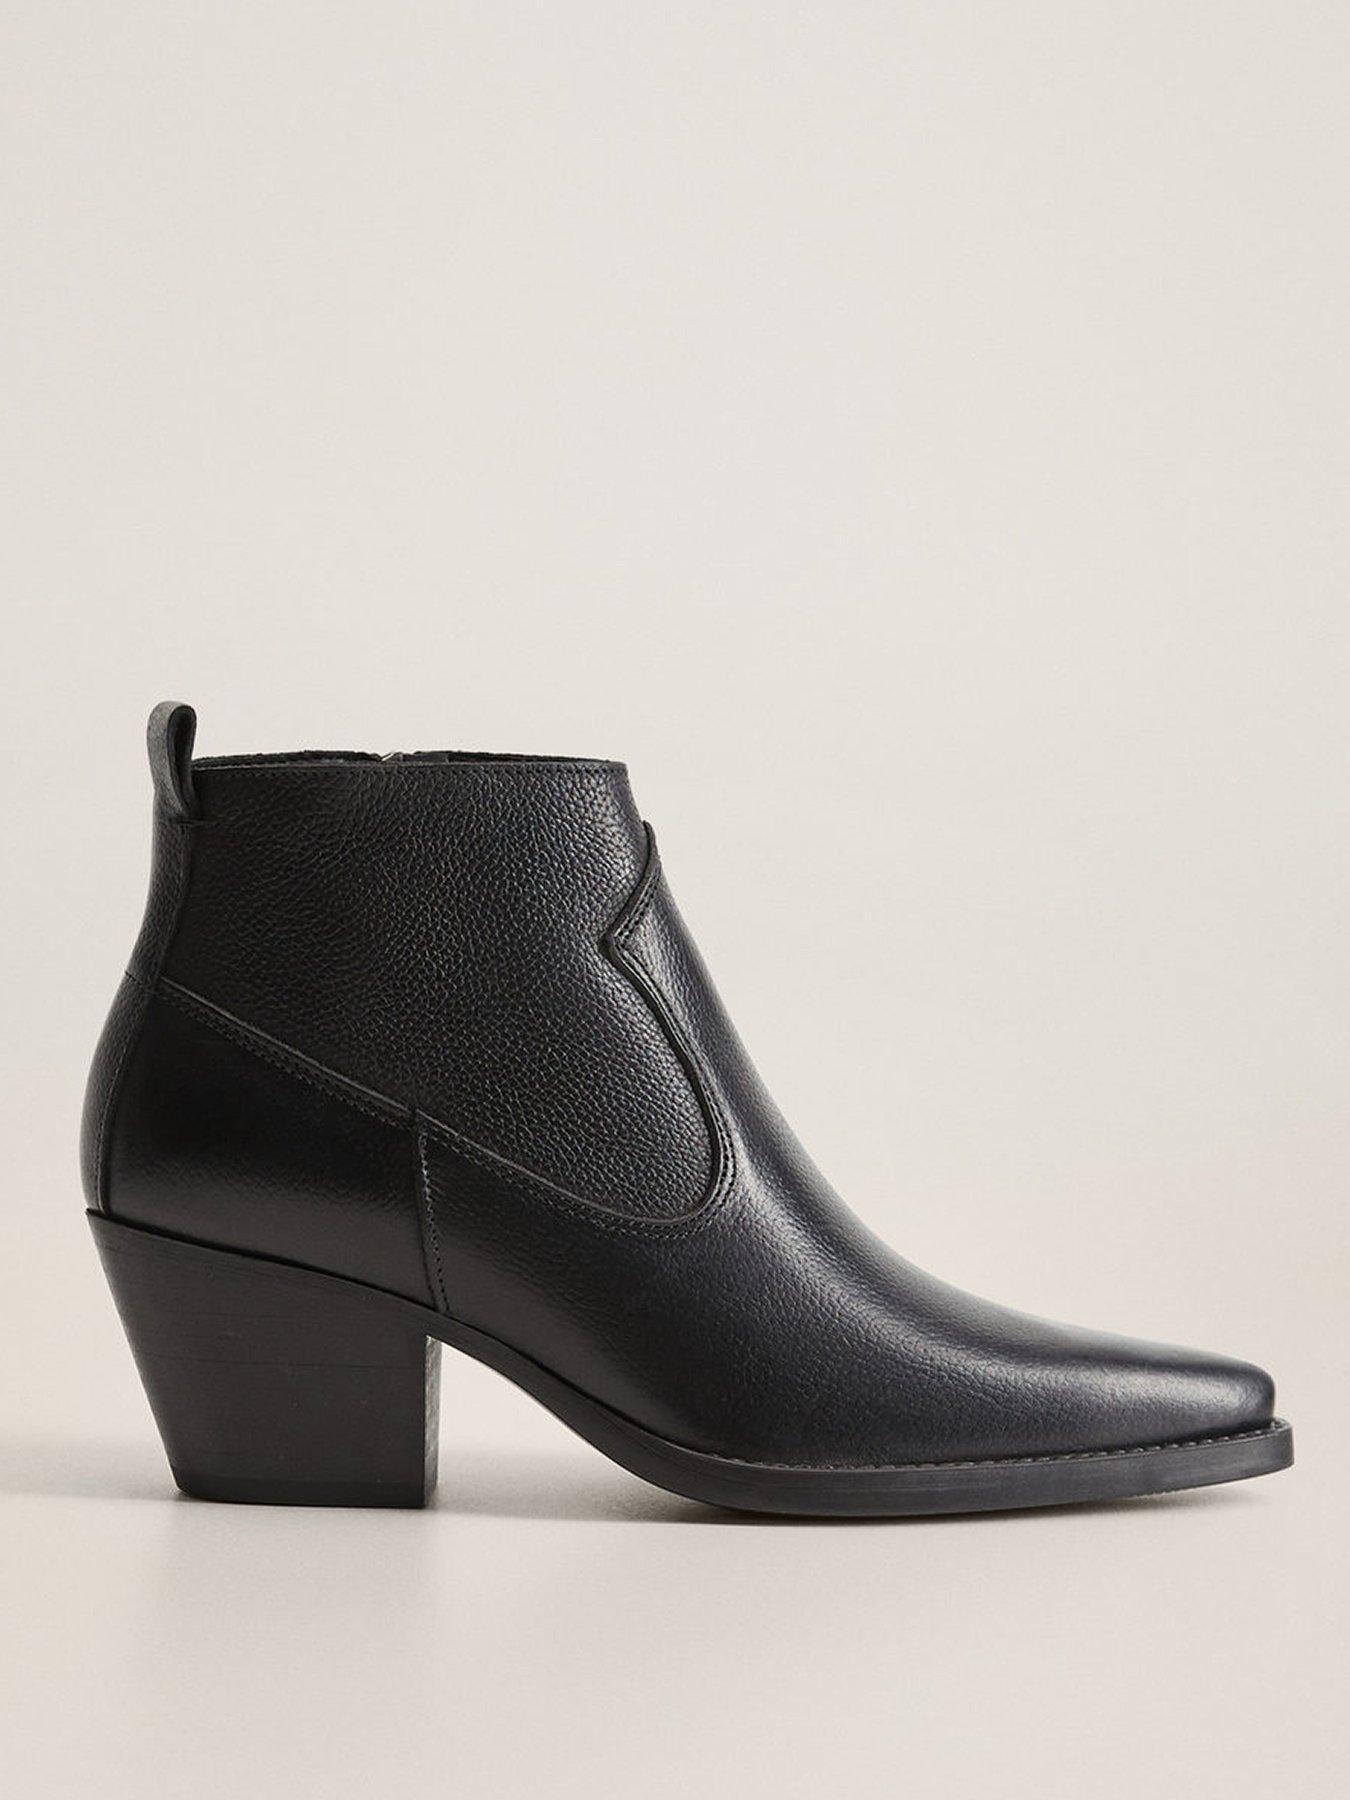 mango leather western chelsea boot in black